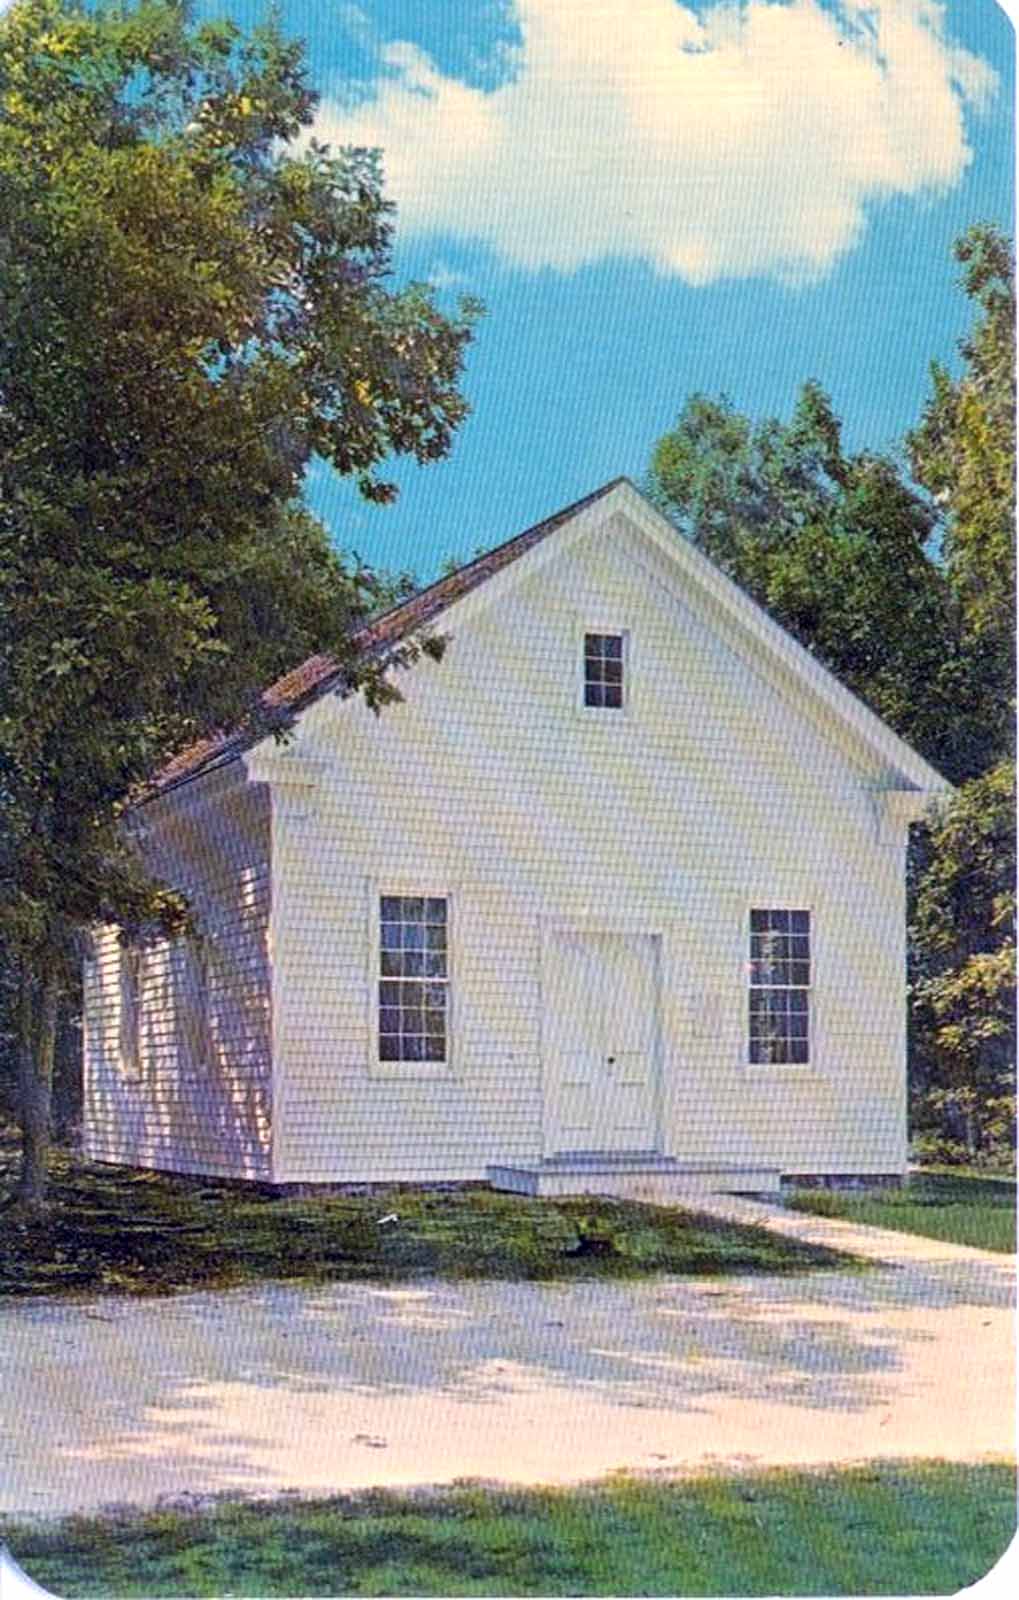 Absecon - Smithville Inn - Sugar Hill Chapel - 1960s